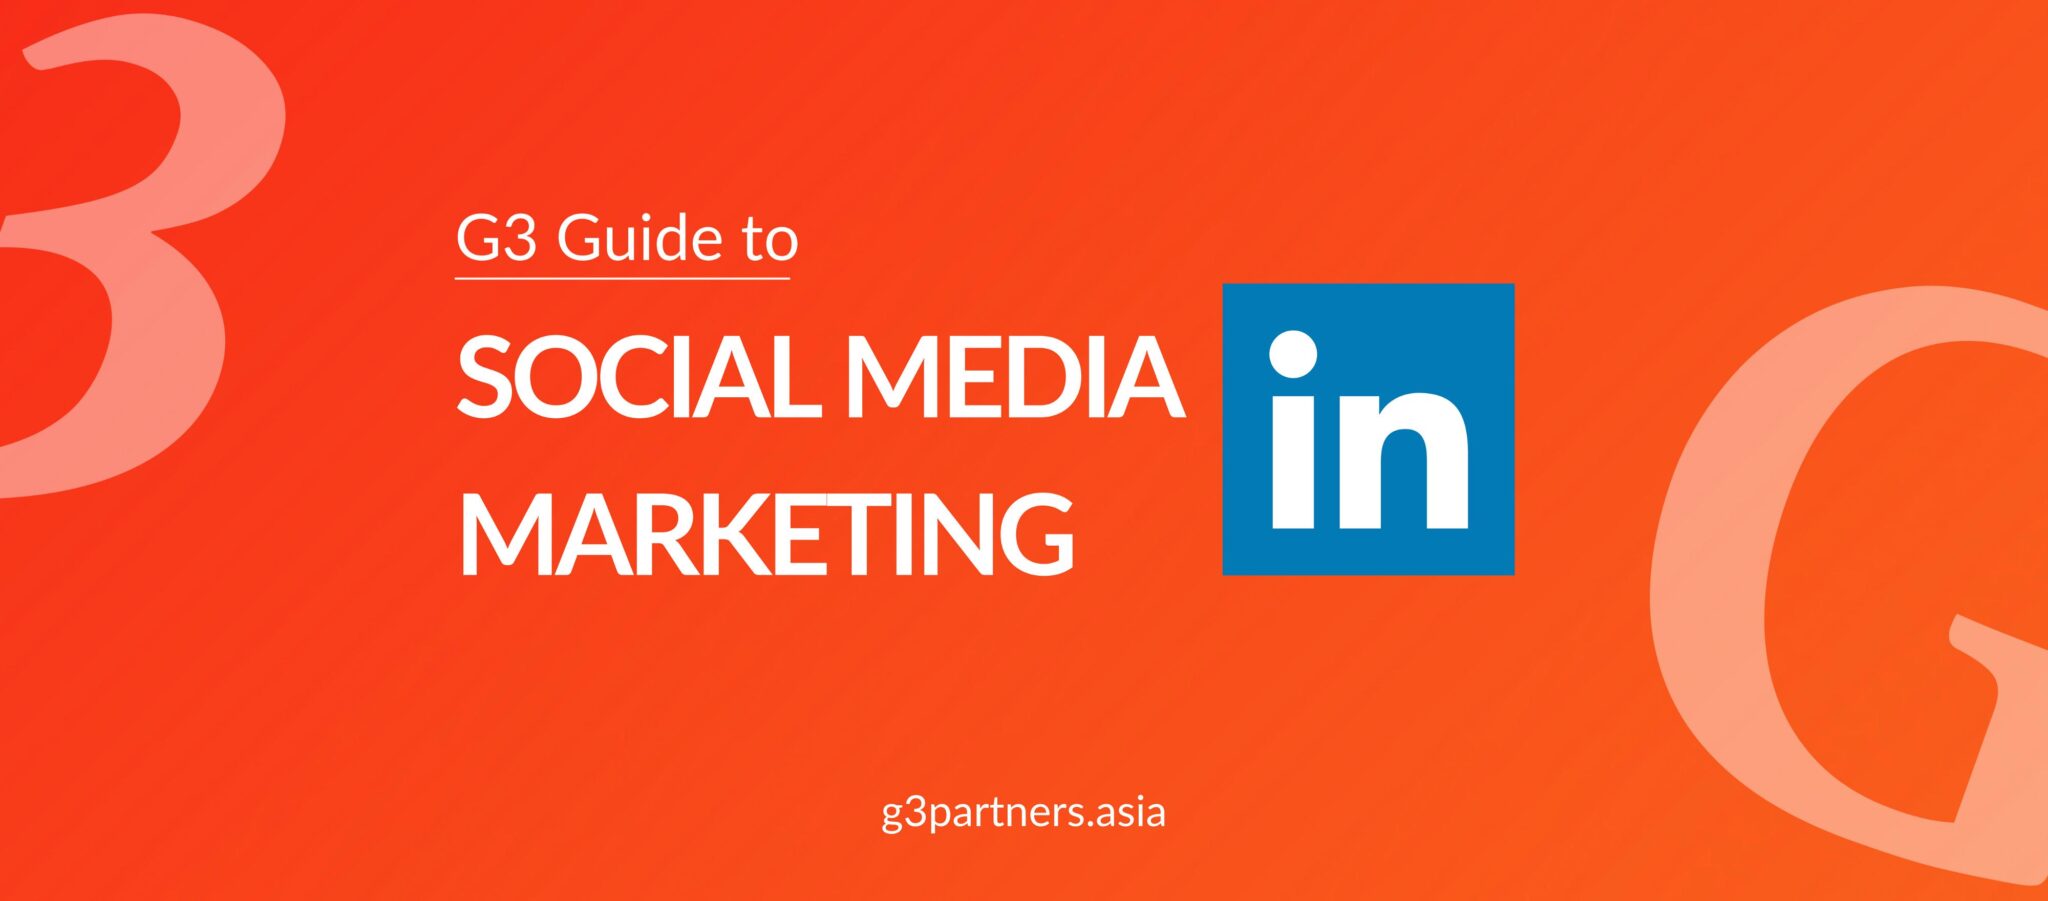 How to Do Social Media Marketing on LinkedIn